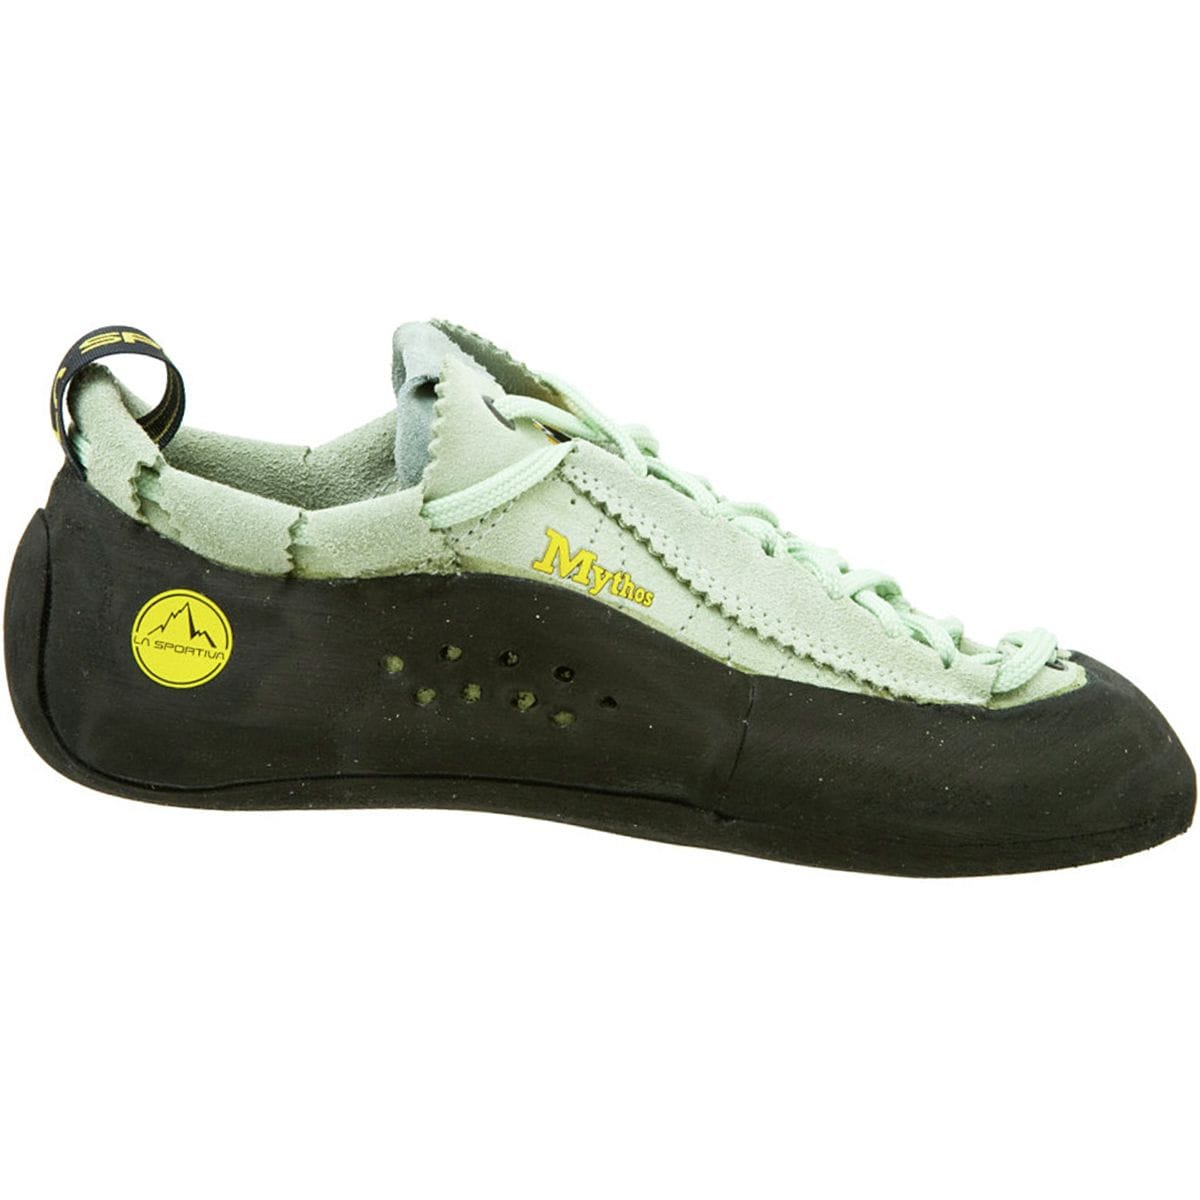 Vibram XS grip2. La Sportiva Mythos 30th Anniversary. Стельки la Sportiva. Polo Climb обувь. La shoe обувь